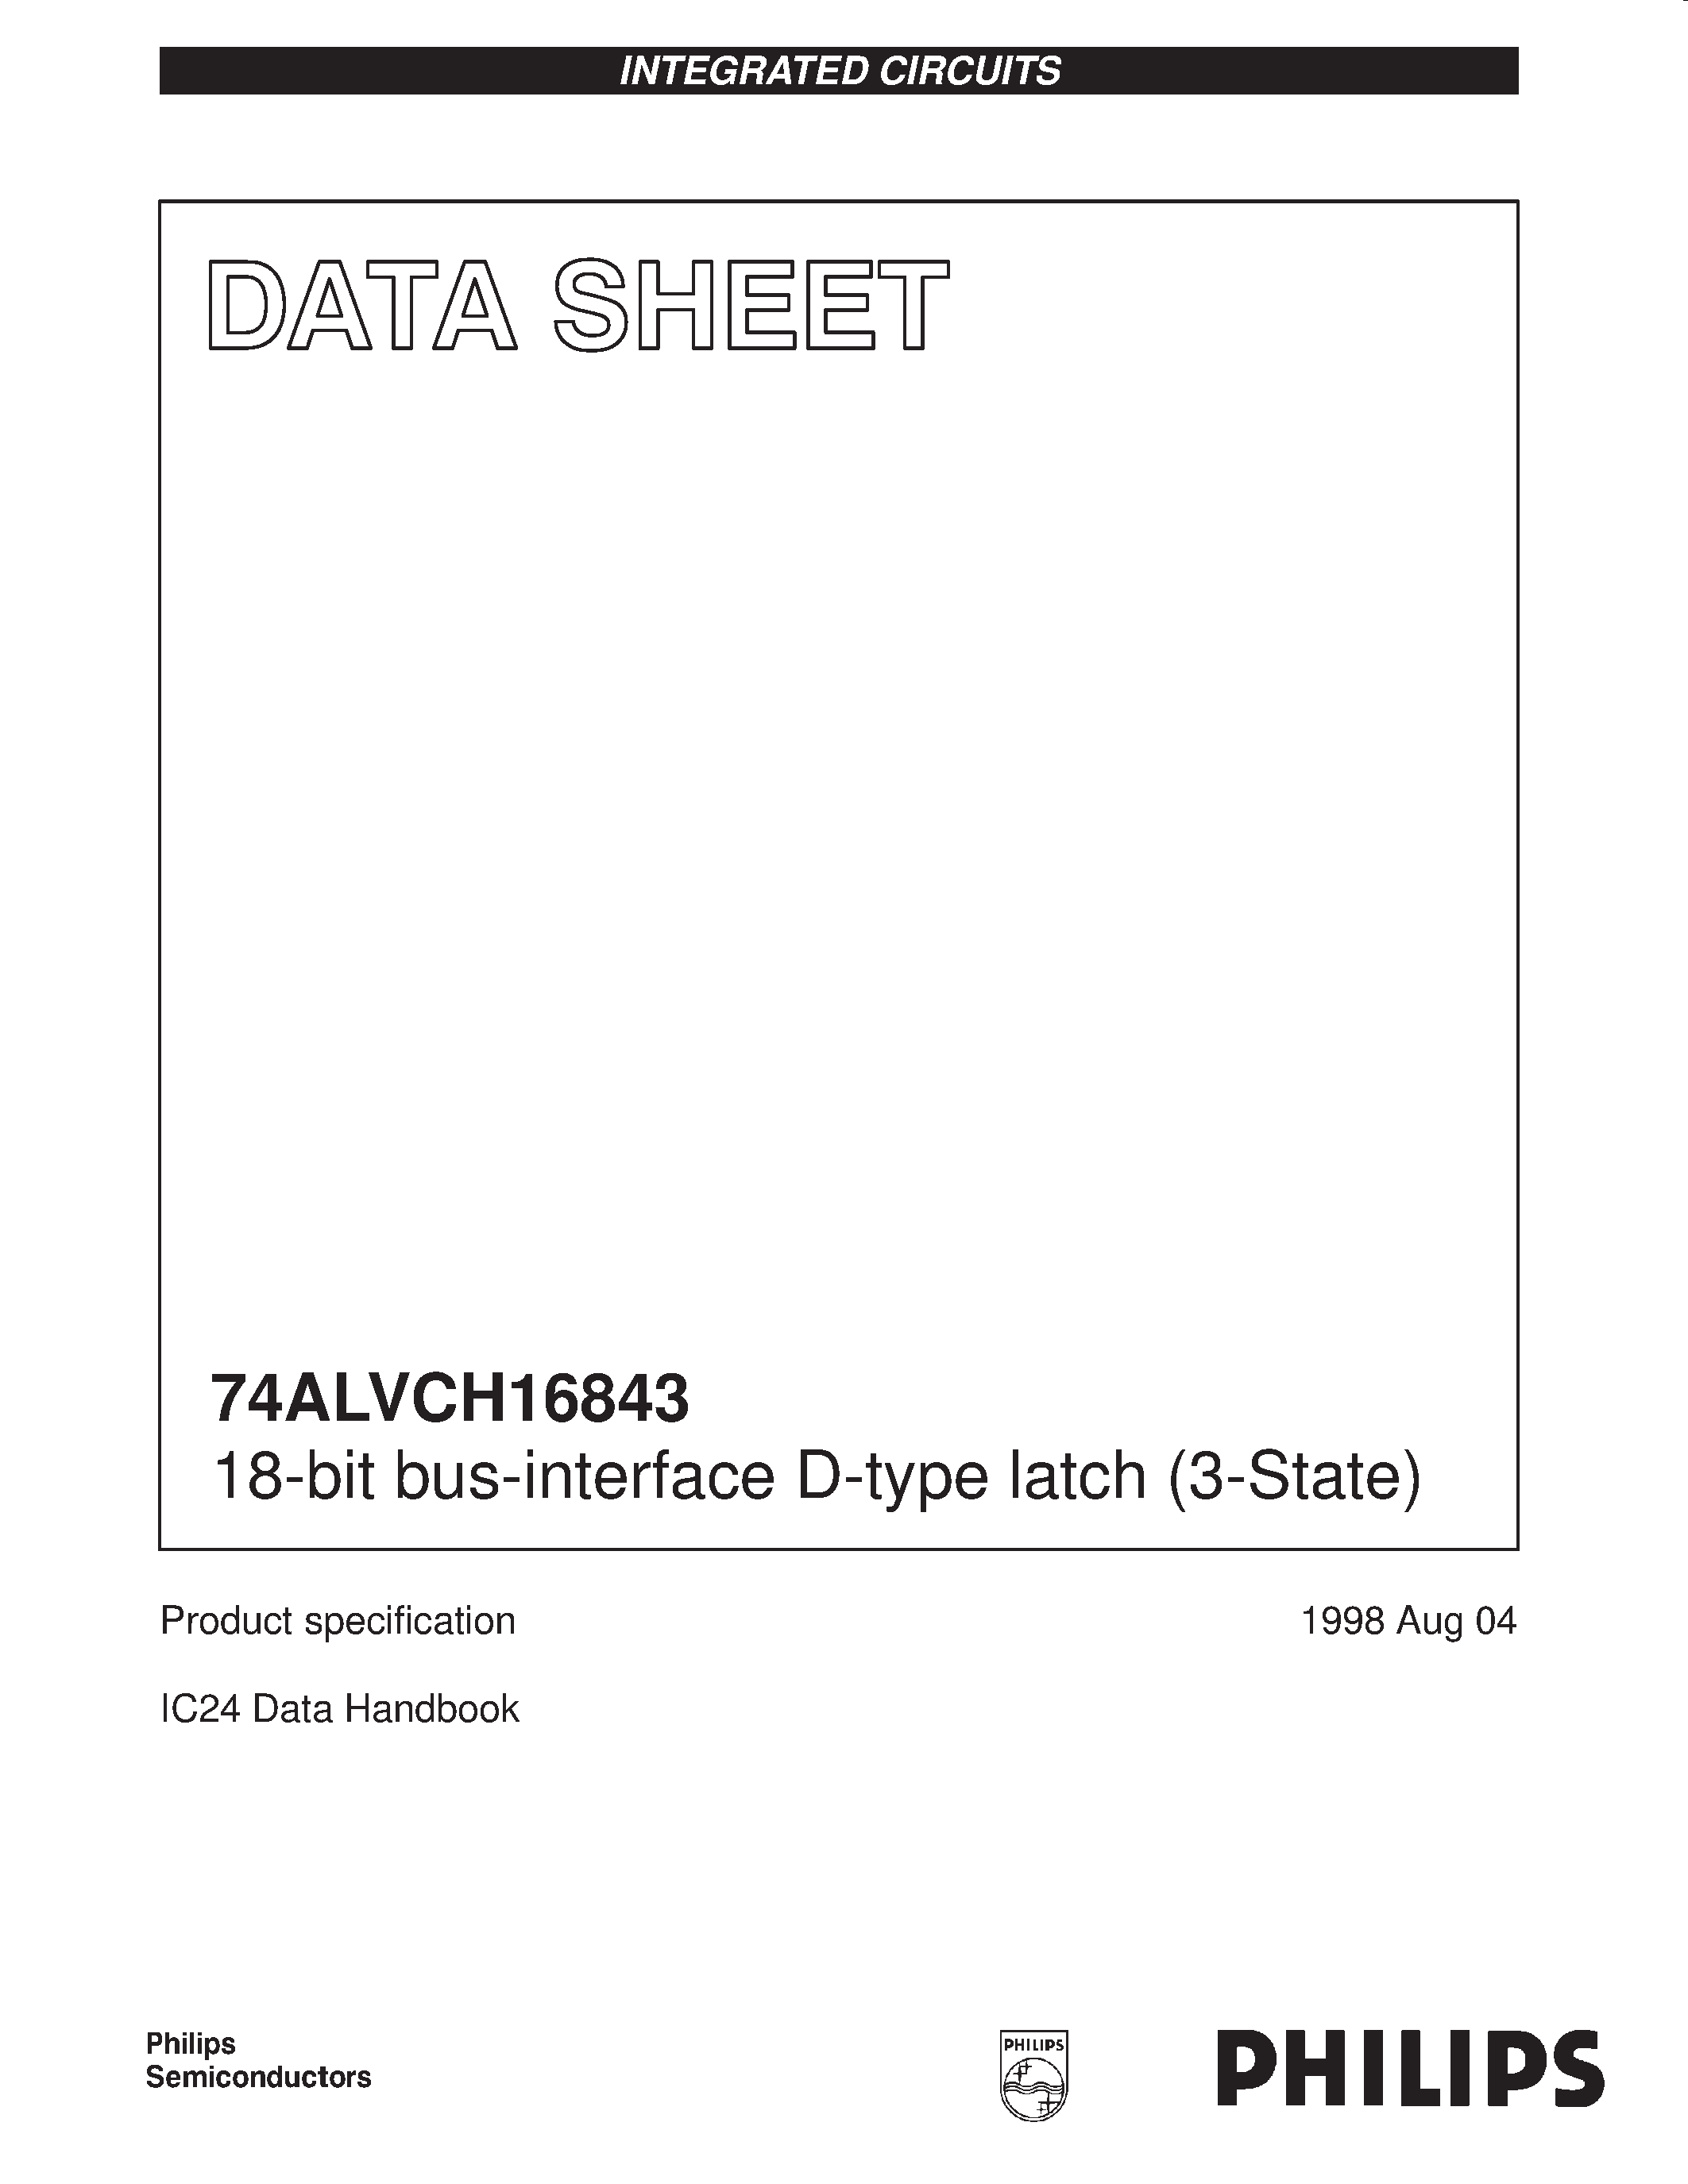 Даташит 74ALVCH16843DGG - 18-bit bus-interface D-type latch 3-State страница 1